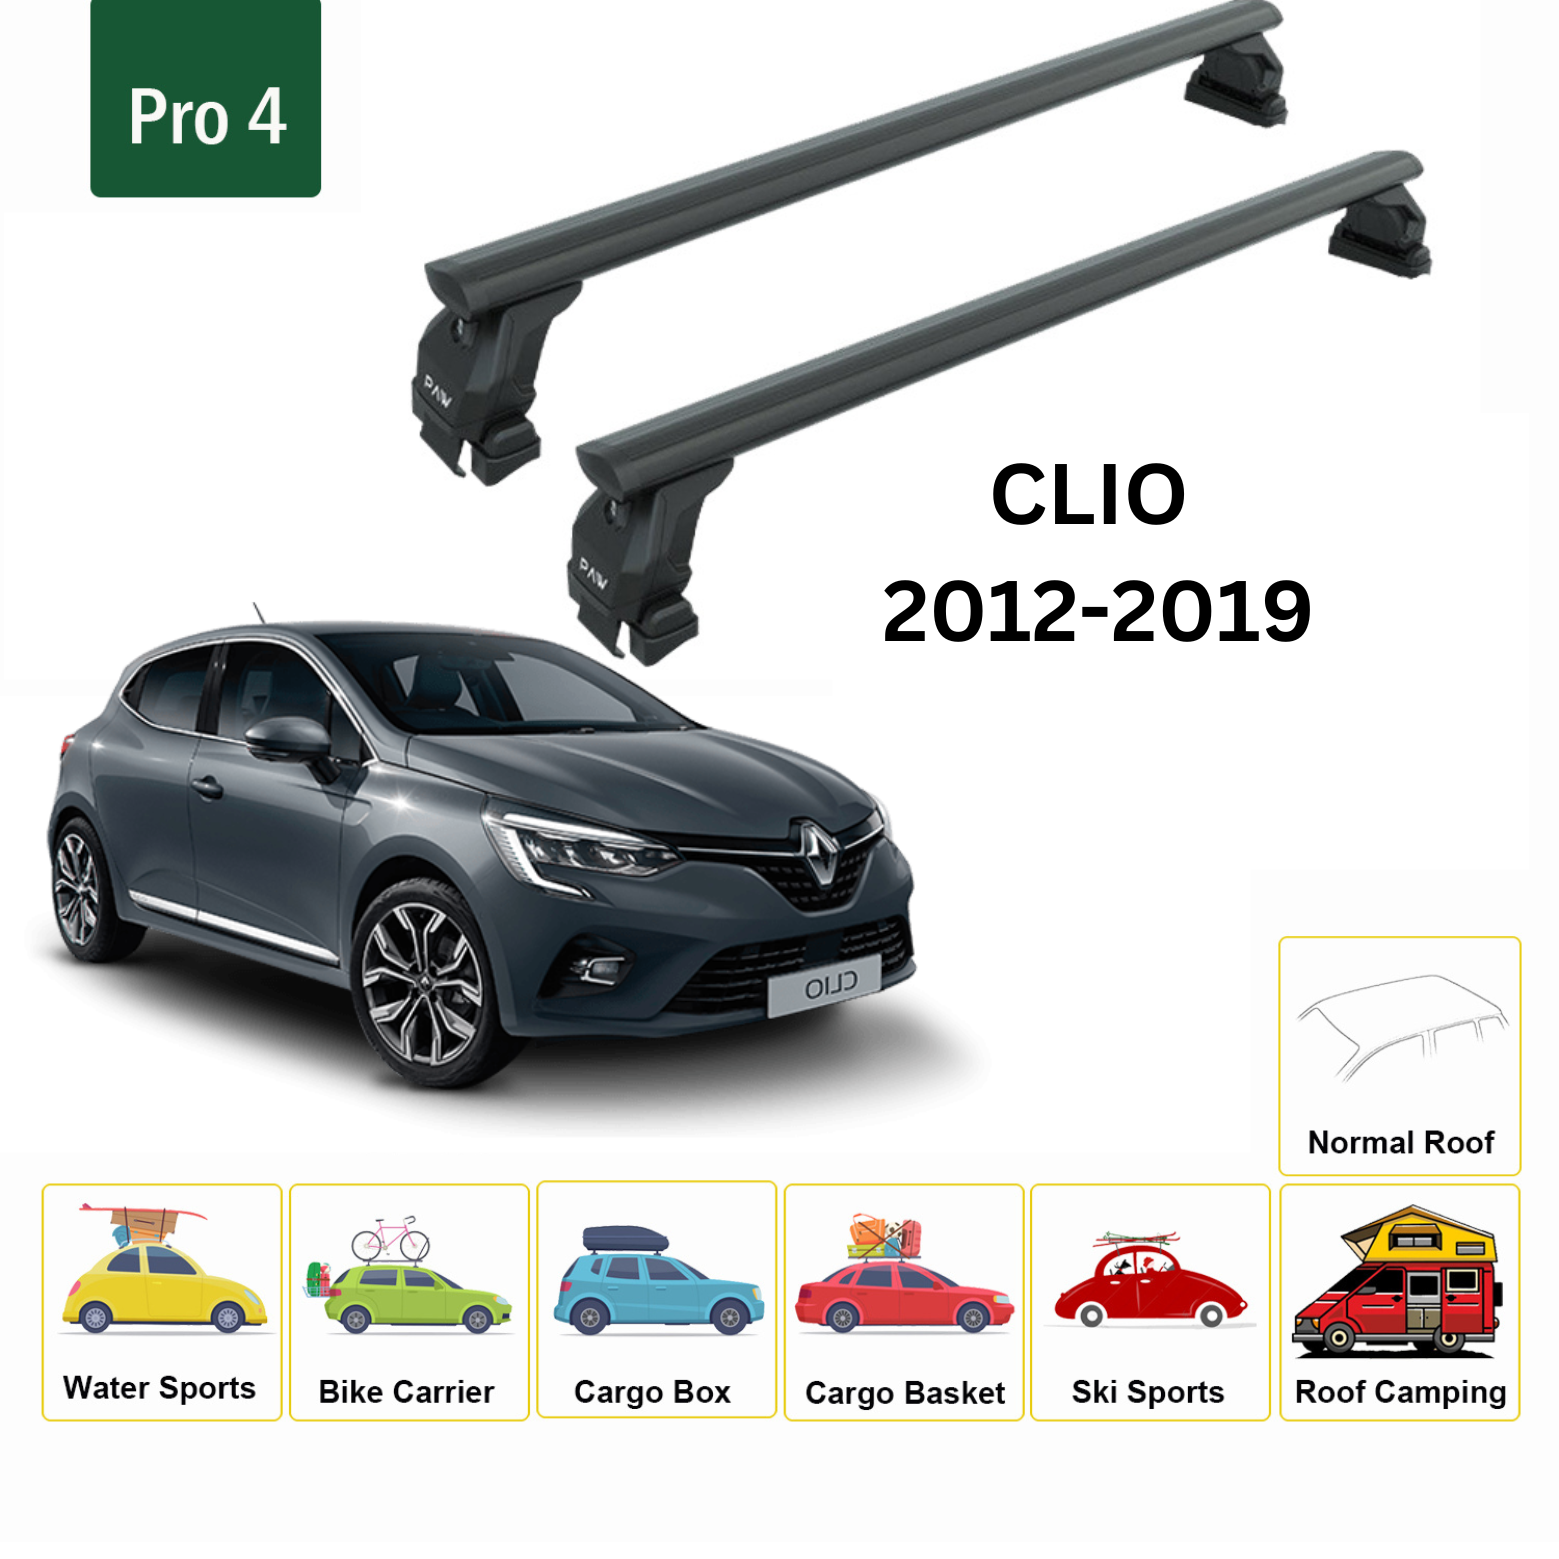 For Renault Clio 2012-2019 Roof Rack System, Aluminium Cross Bar, Metal Bracket, Normal Roof, Black